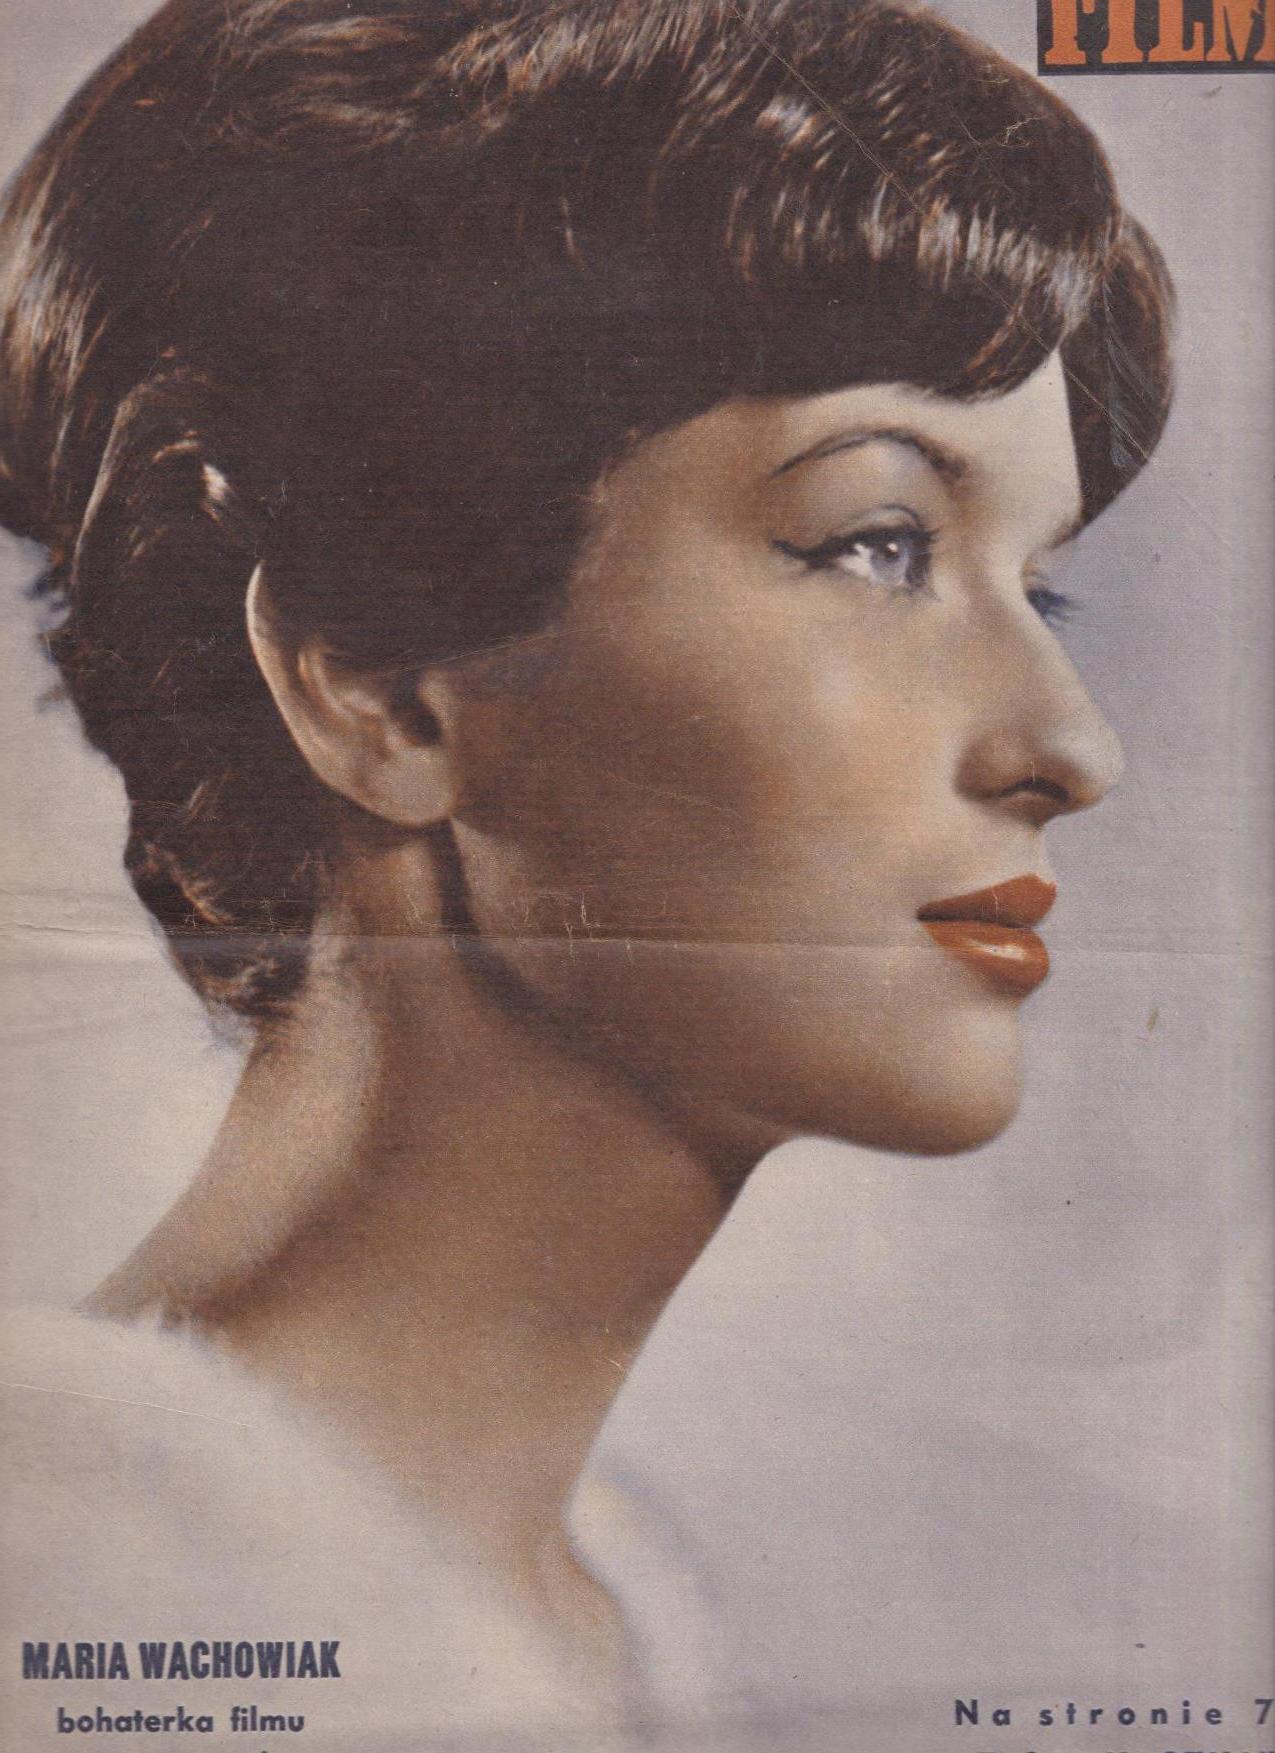 Filom nº 6 (Revista Polaca) Año 1961